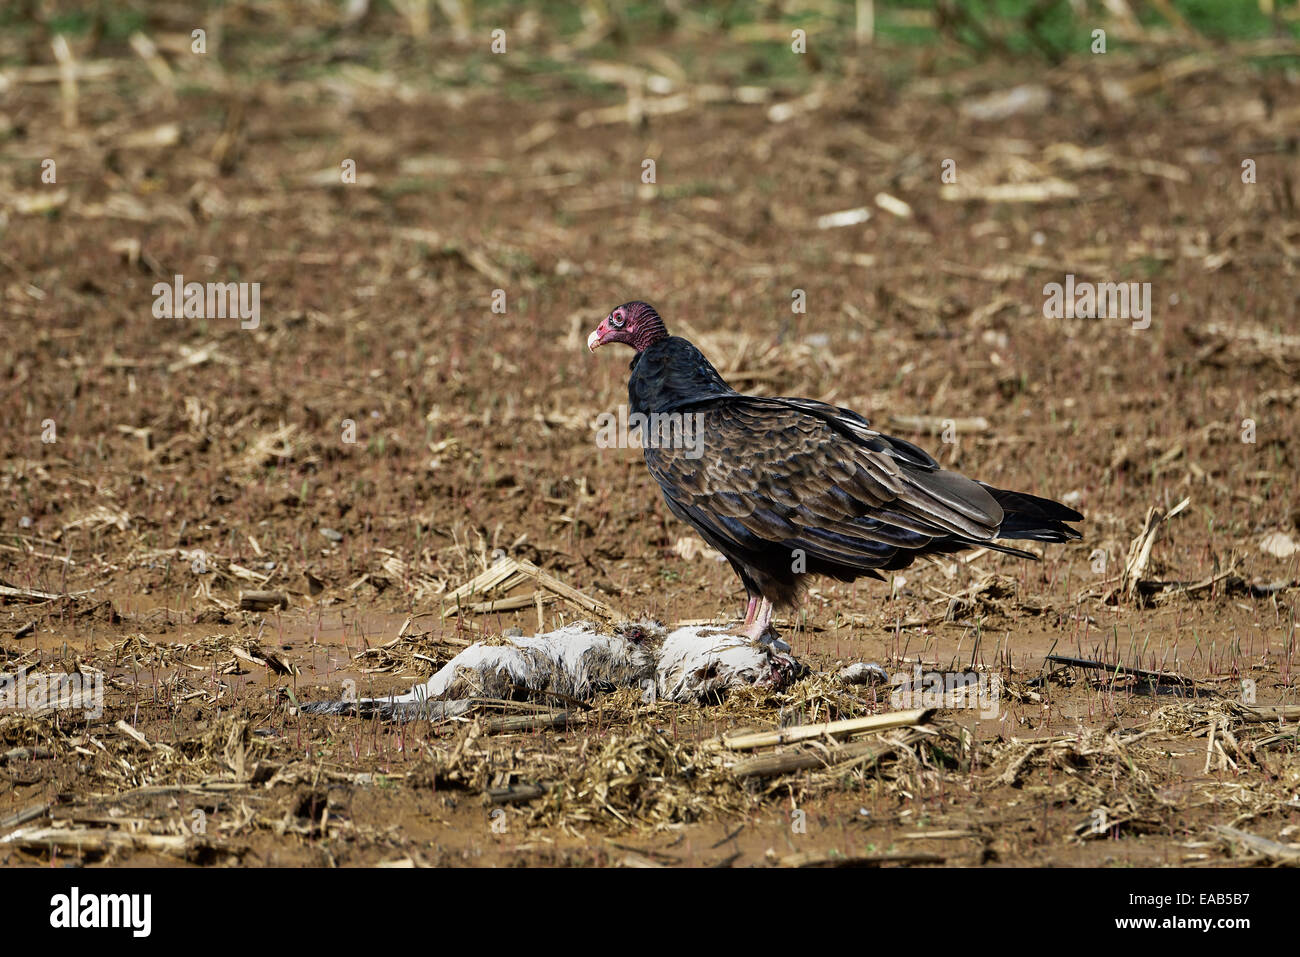 Turkey buzzard feeding on the carcass of a dead animal. Stock Photo